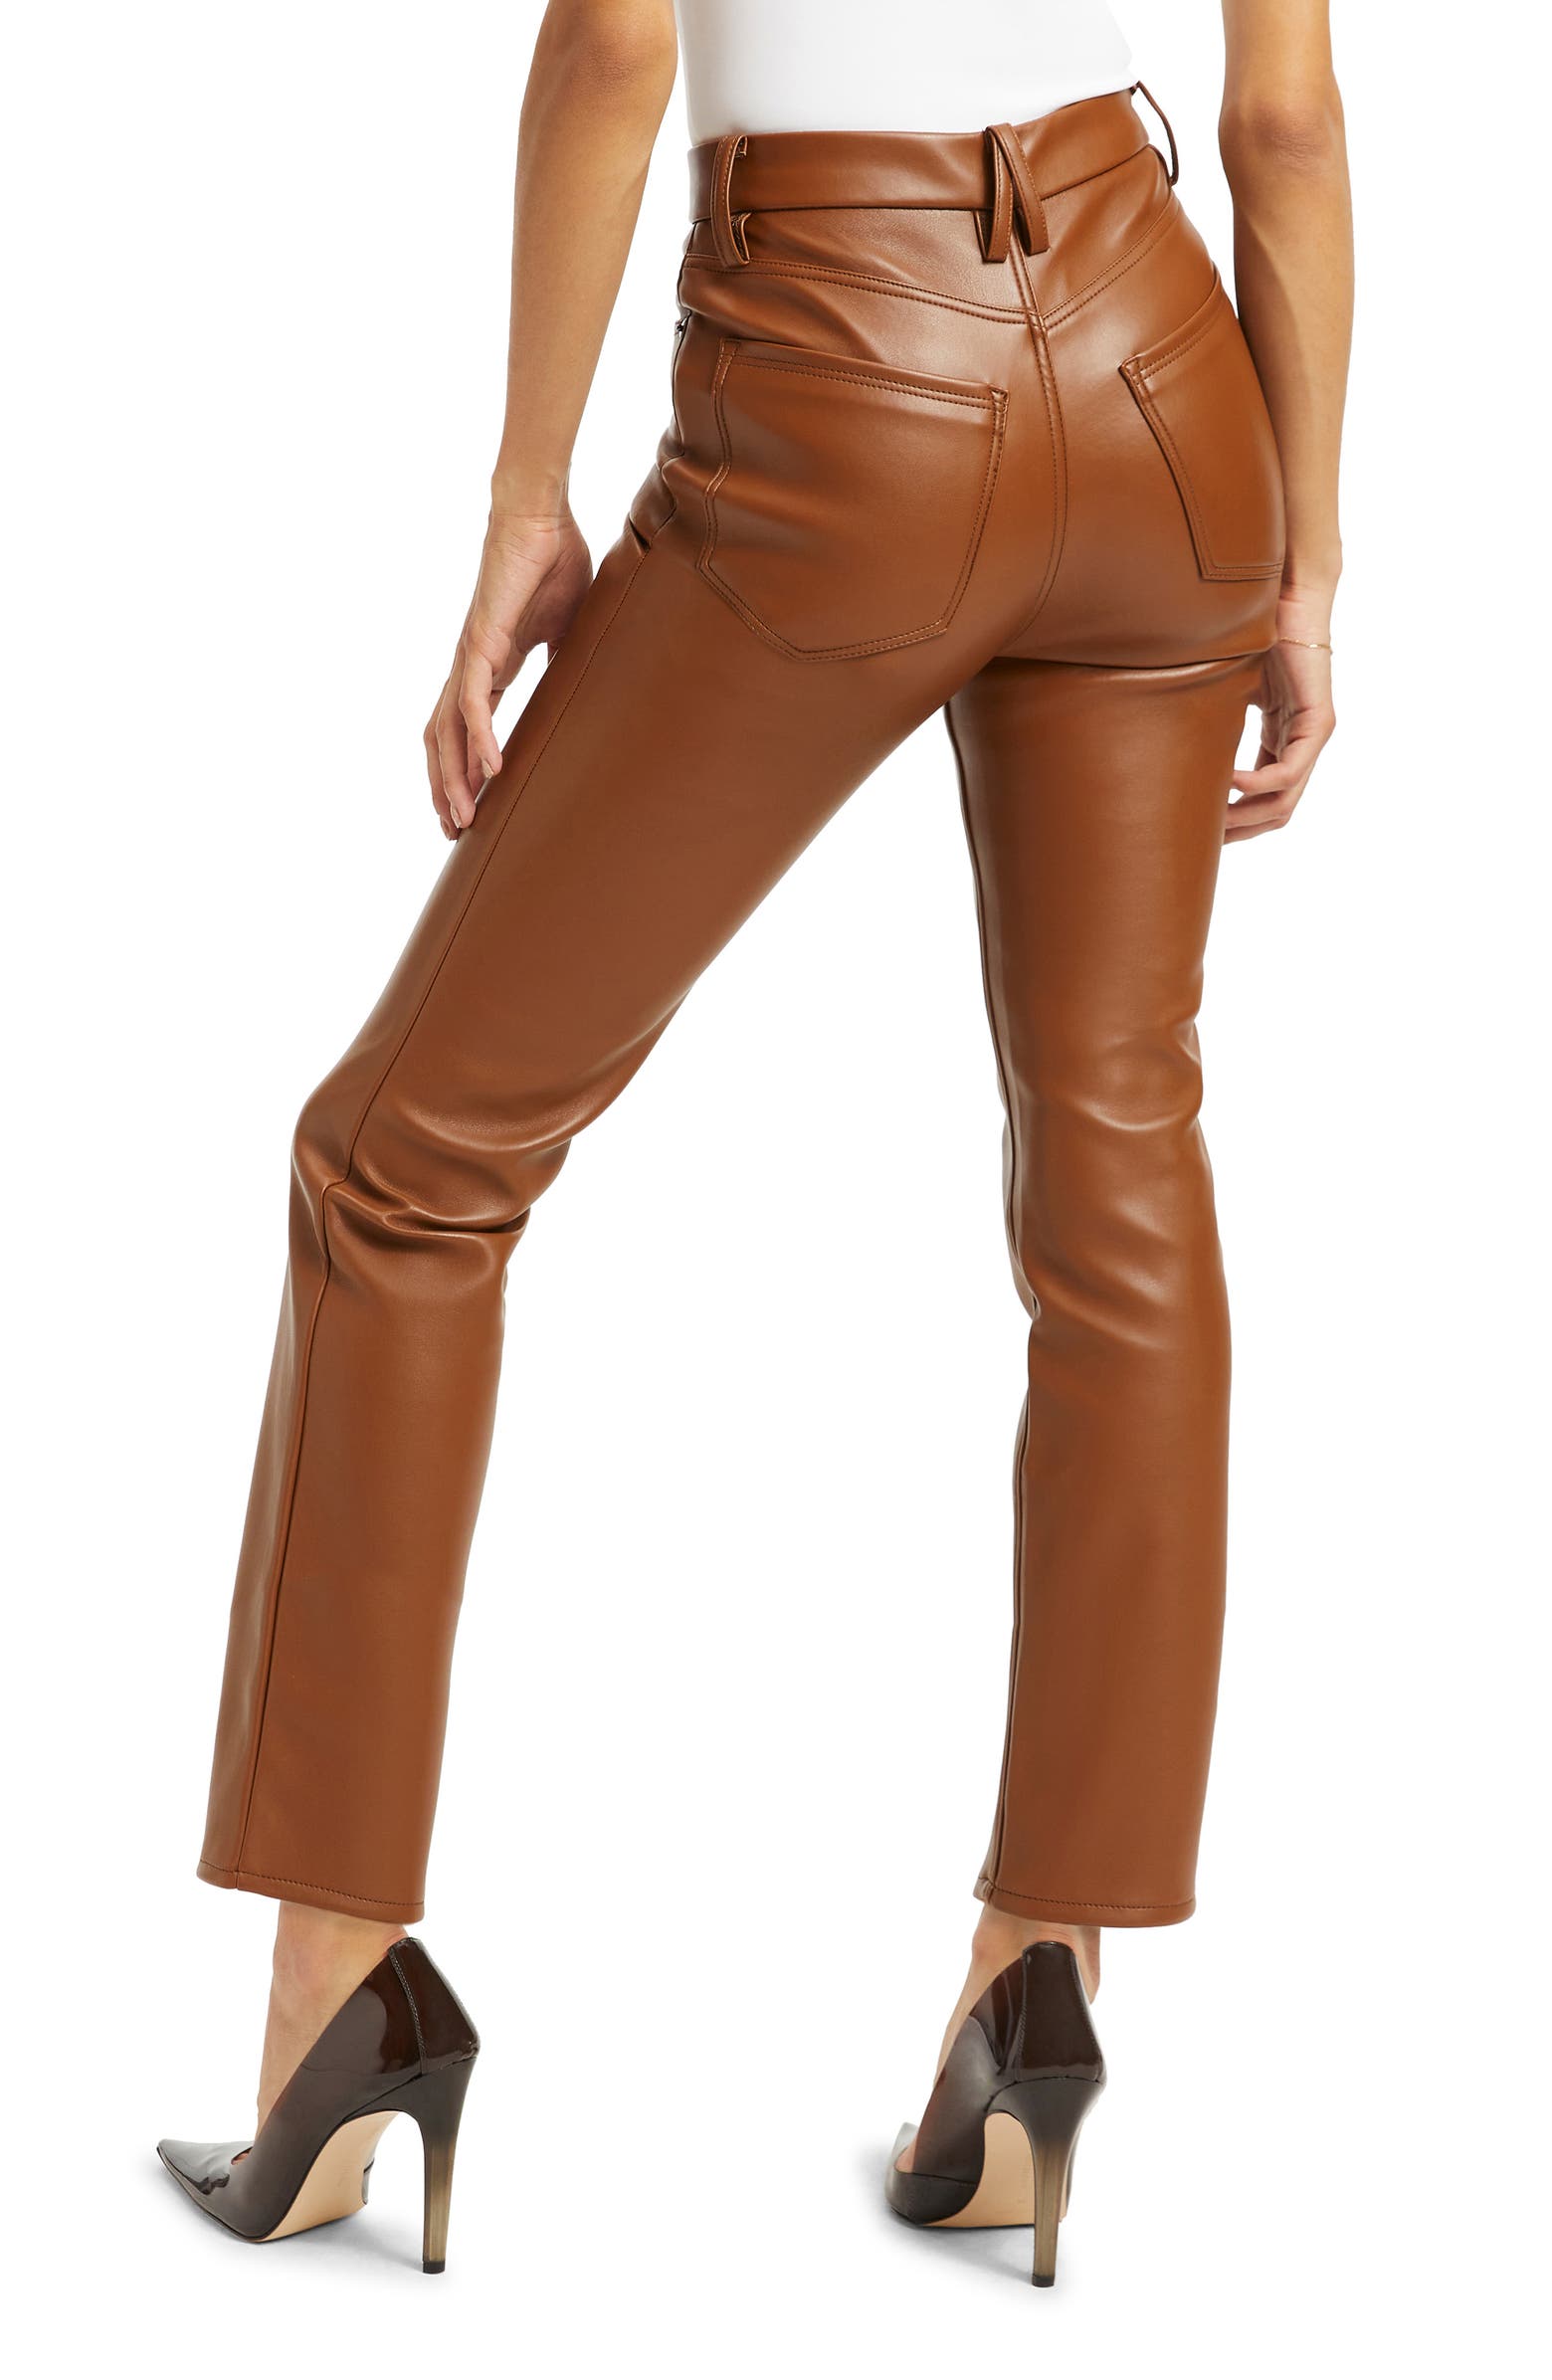 【FAIR FOCUS】long length leather pants